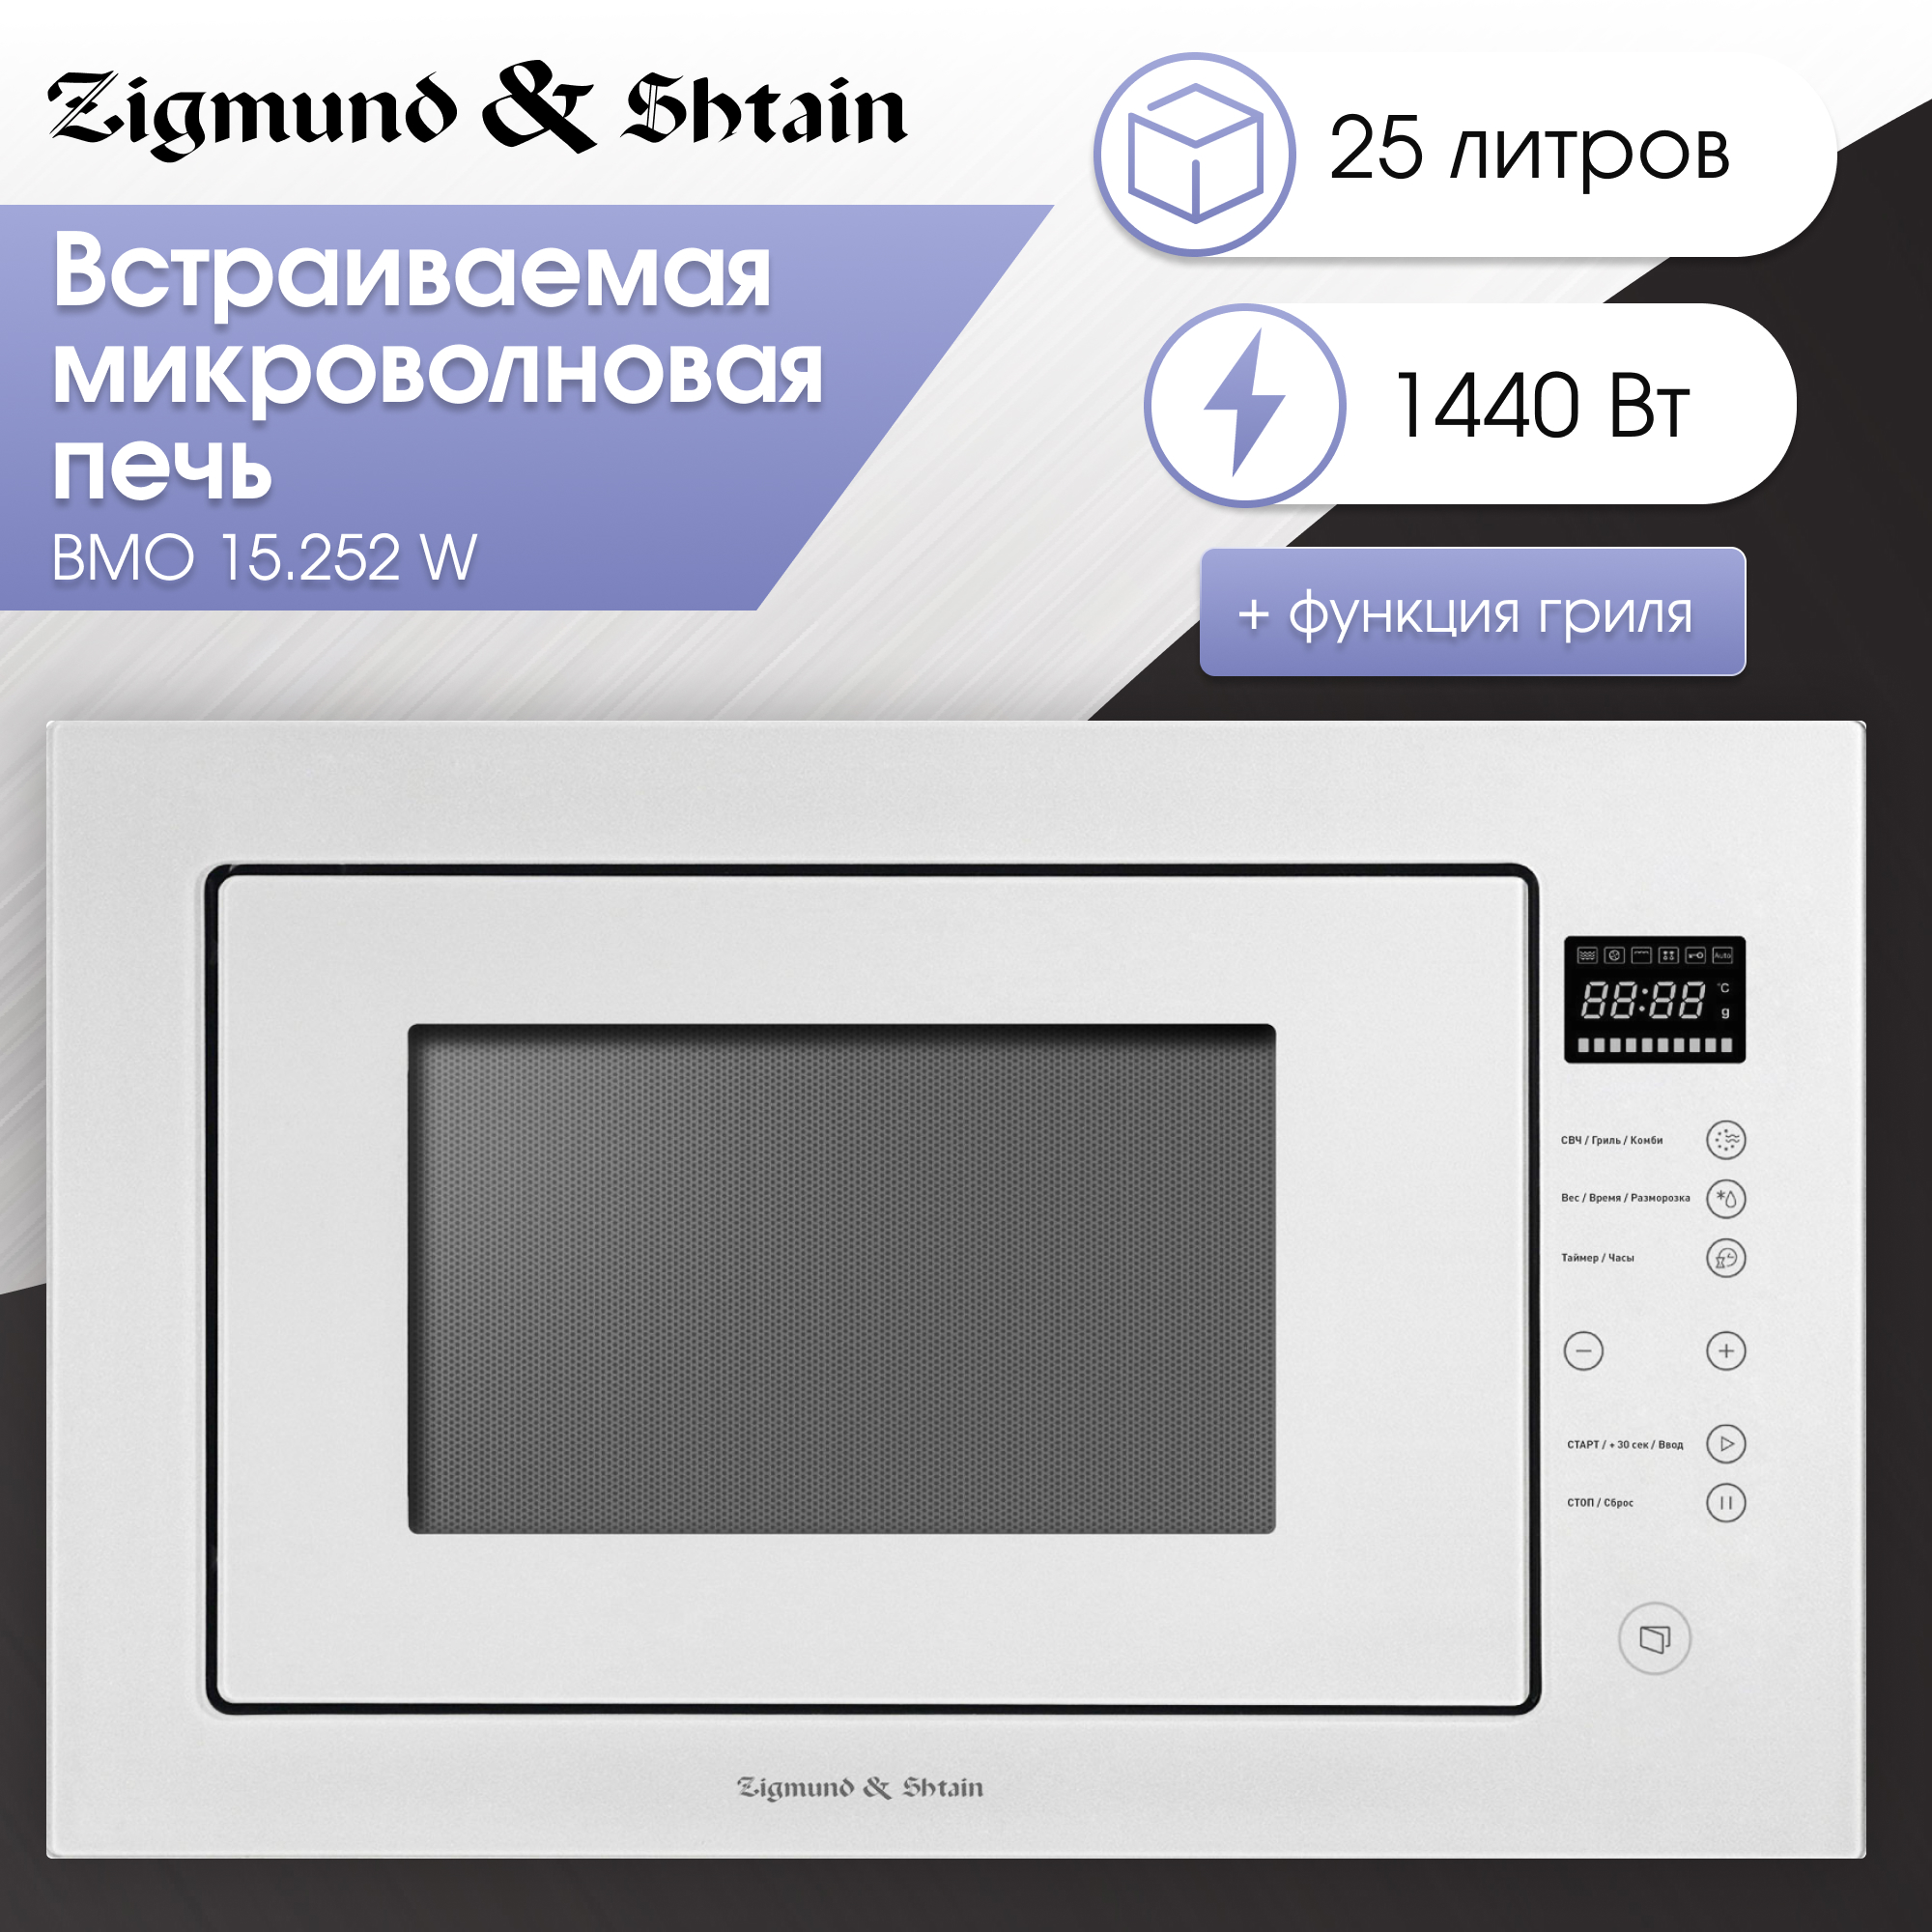 Встраиваемая микроволновая печь Zigmund & Shtain BMO 15.252 W White встраиваемая микроволновая печь maunfeld mbmo 20 1pgw white